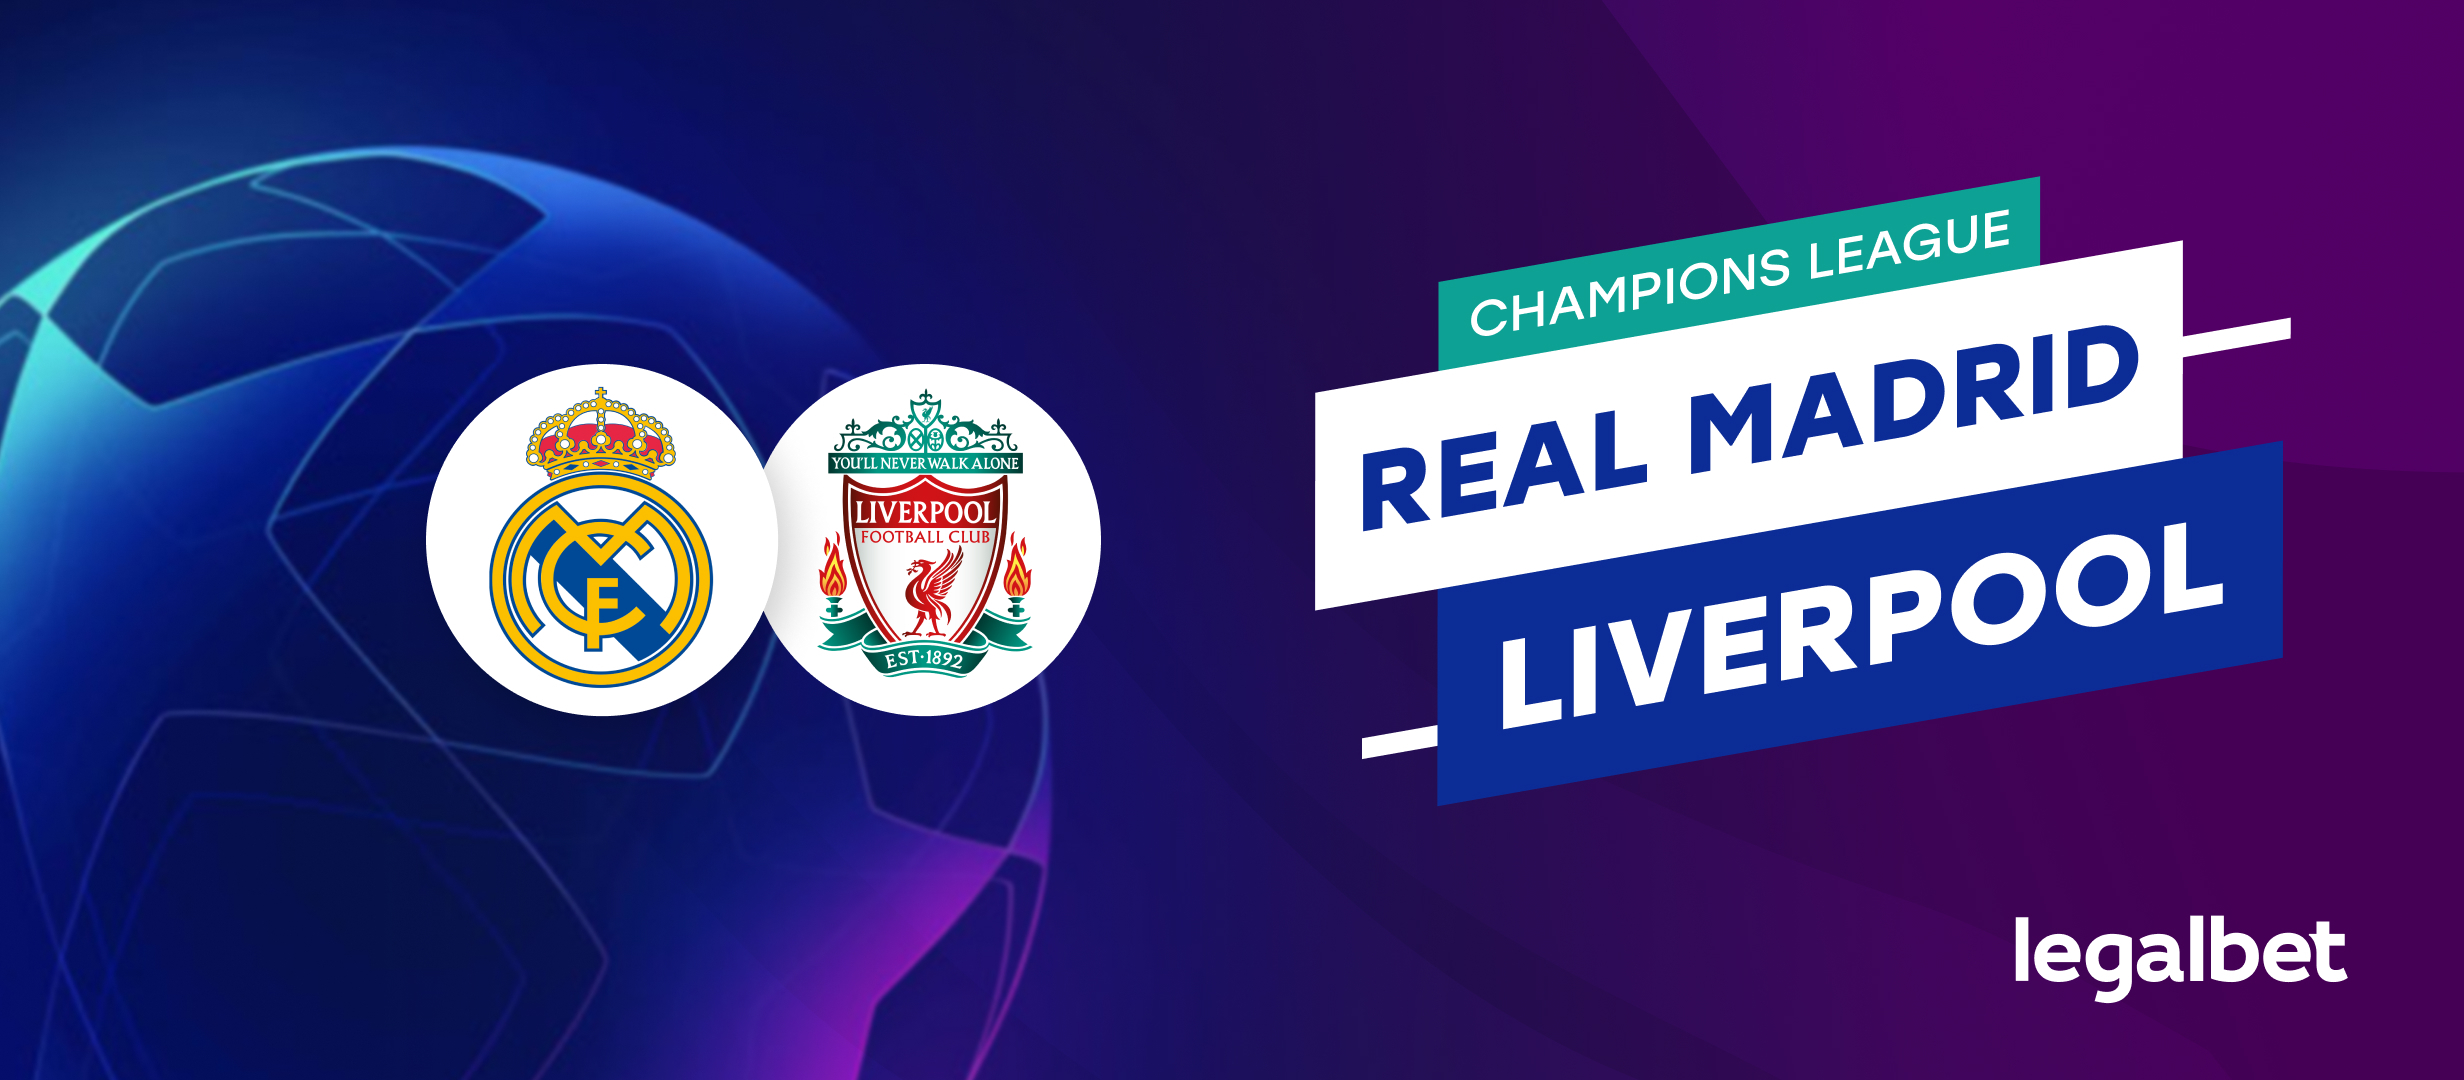 Real Madrid - Liverpool, ponturi la pariuri Champions League